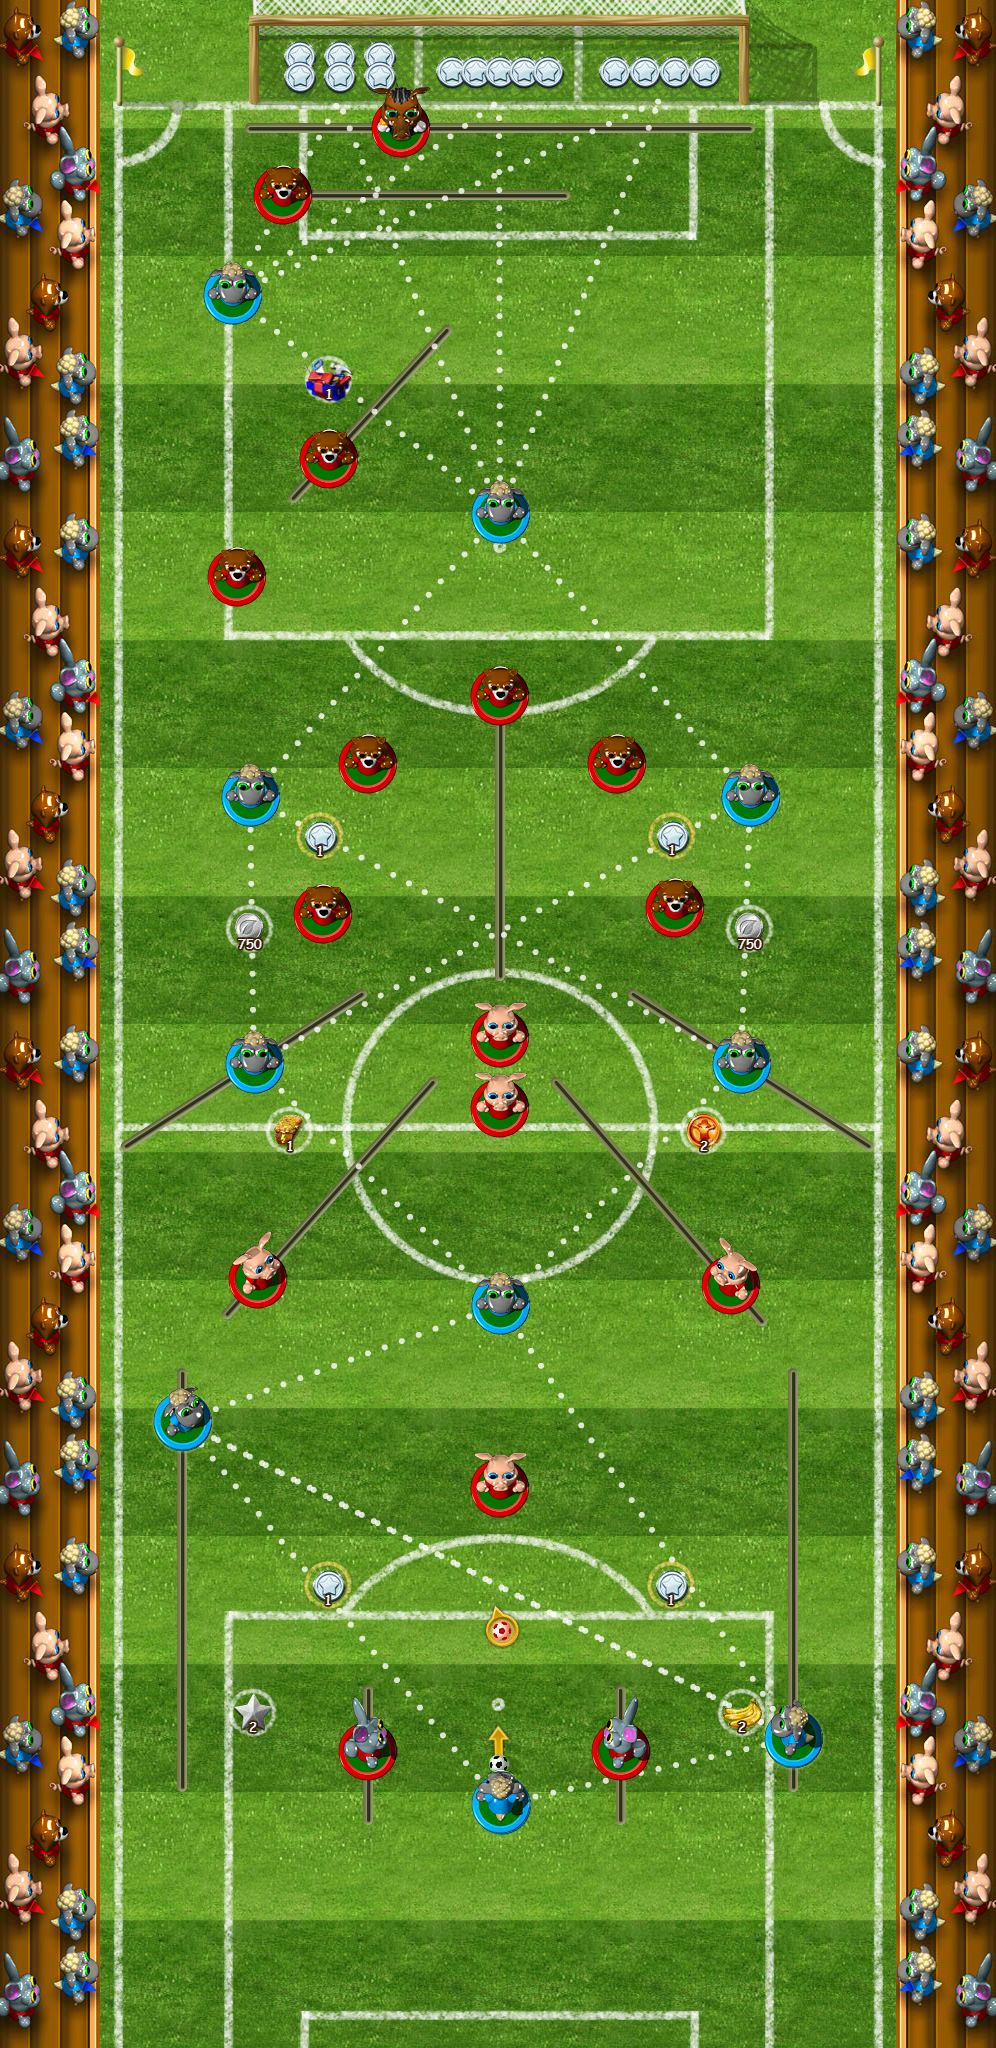 soccerjul2019_layout8.png